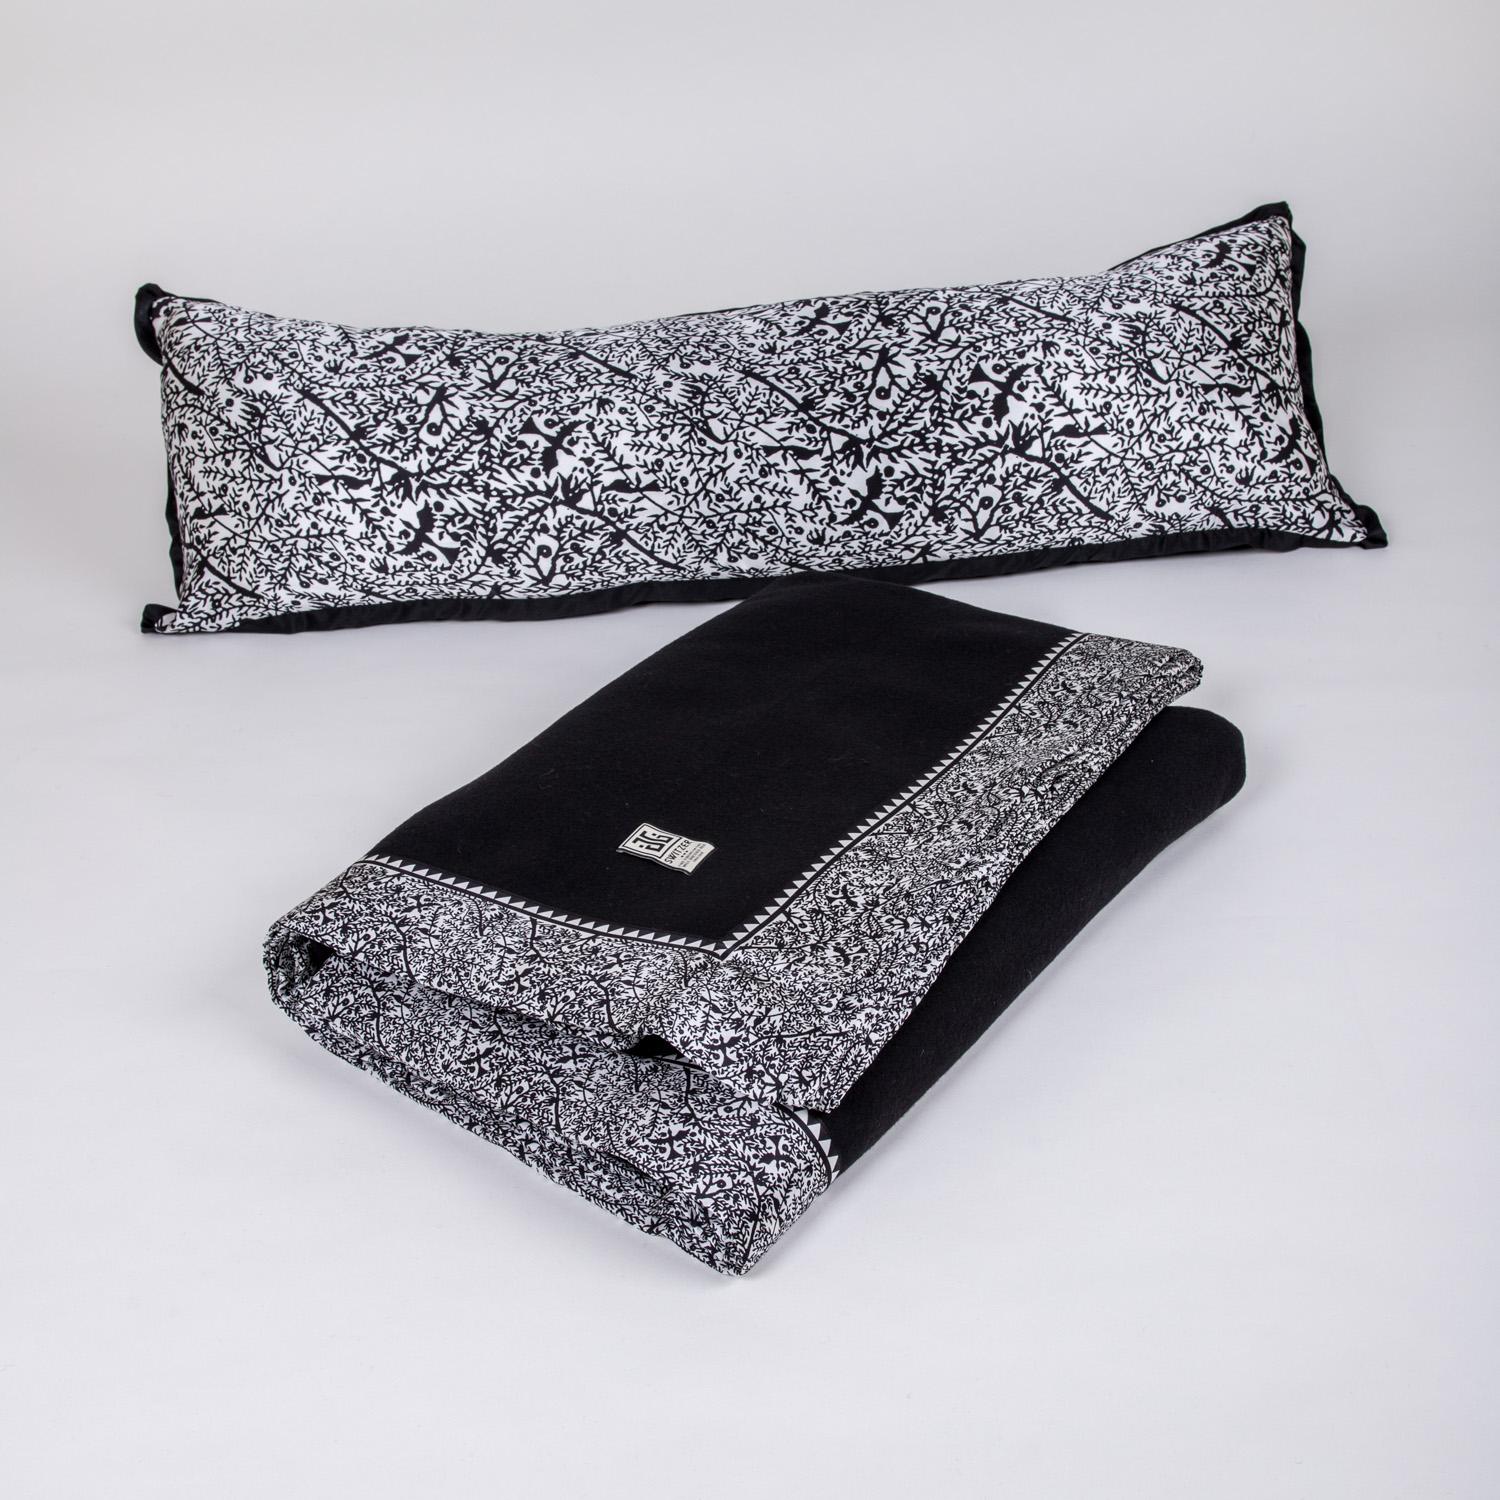 Custom Designed Luxury 100% Merino Wool Emilie King Blanket with Body Pillow For Sale 2